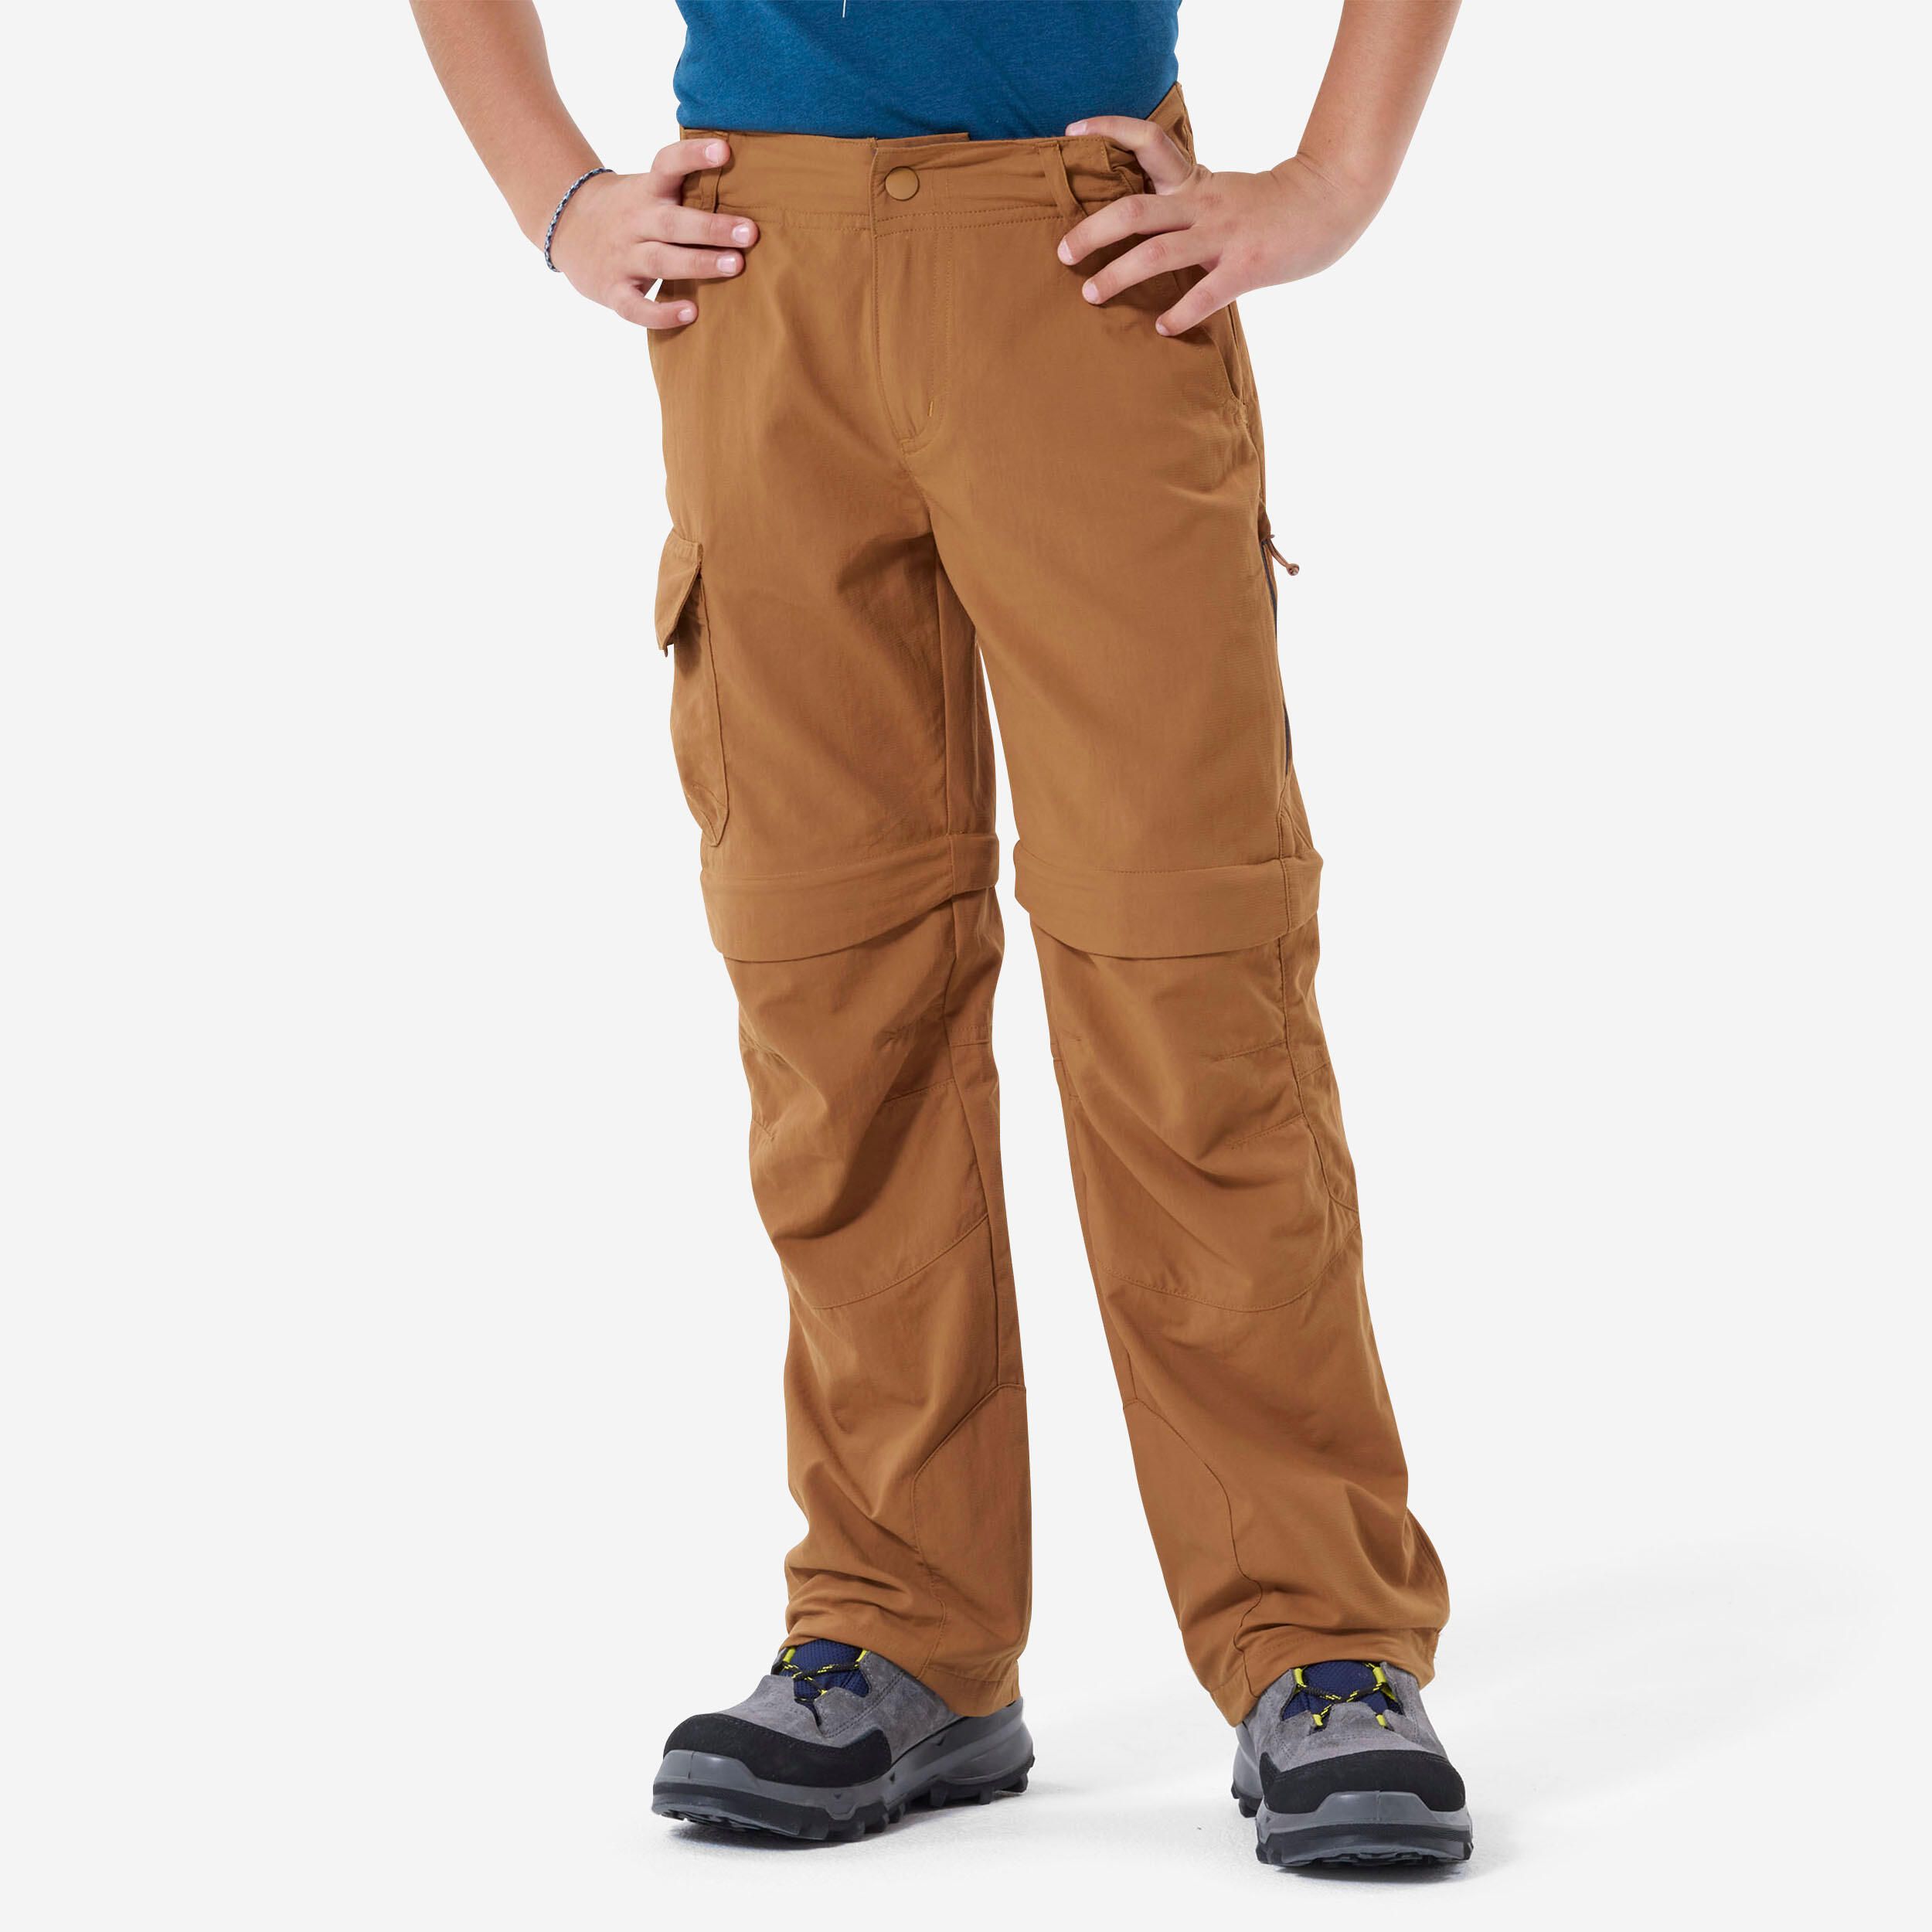 Kids’ Hiking modular trousers MH550 age 7-15 - dark brown 1/9